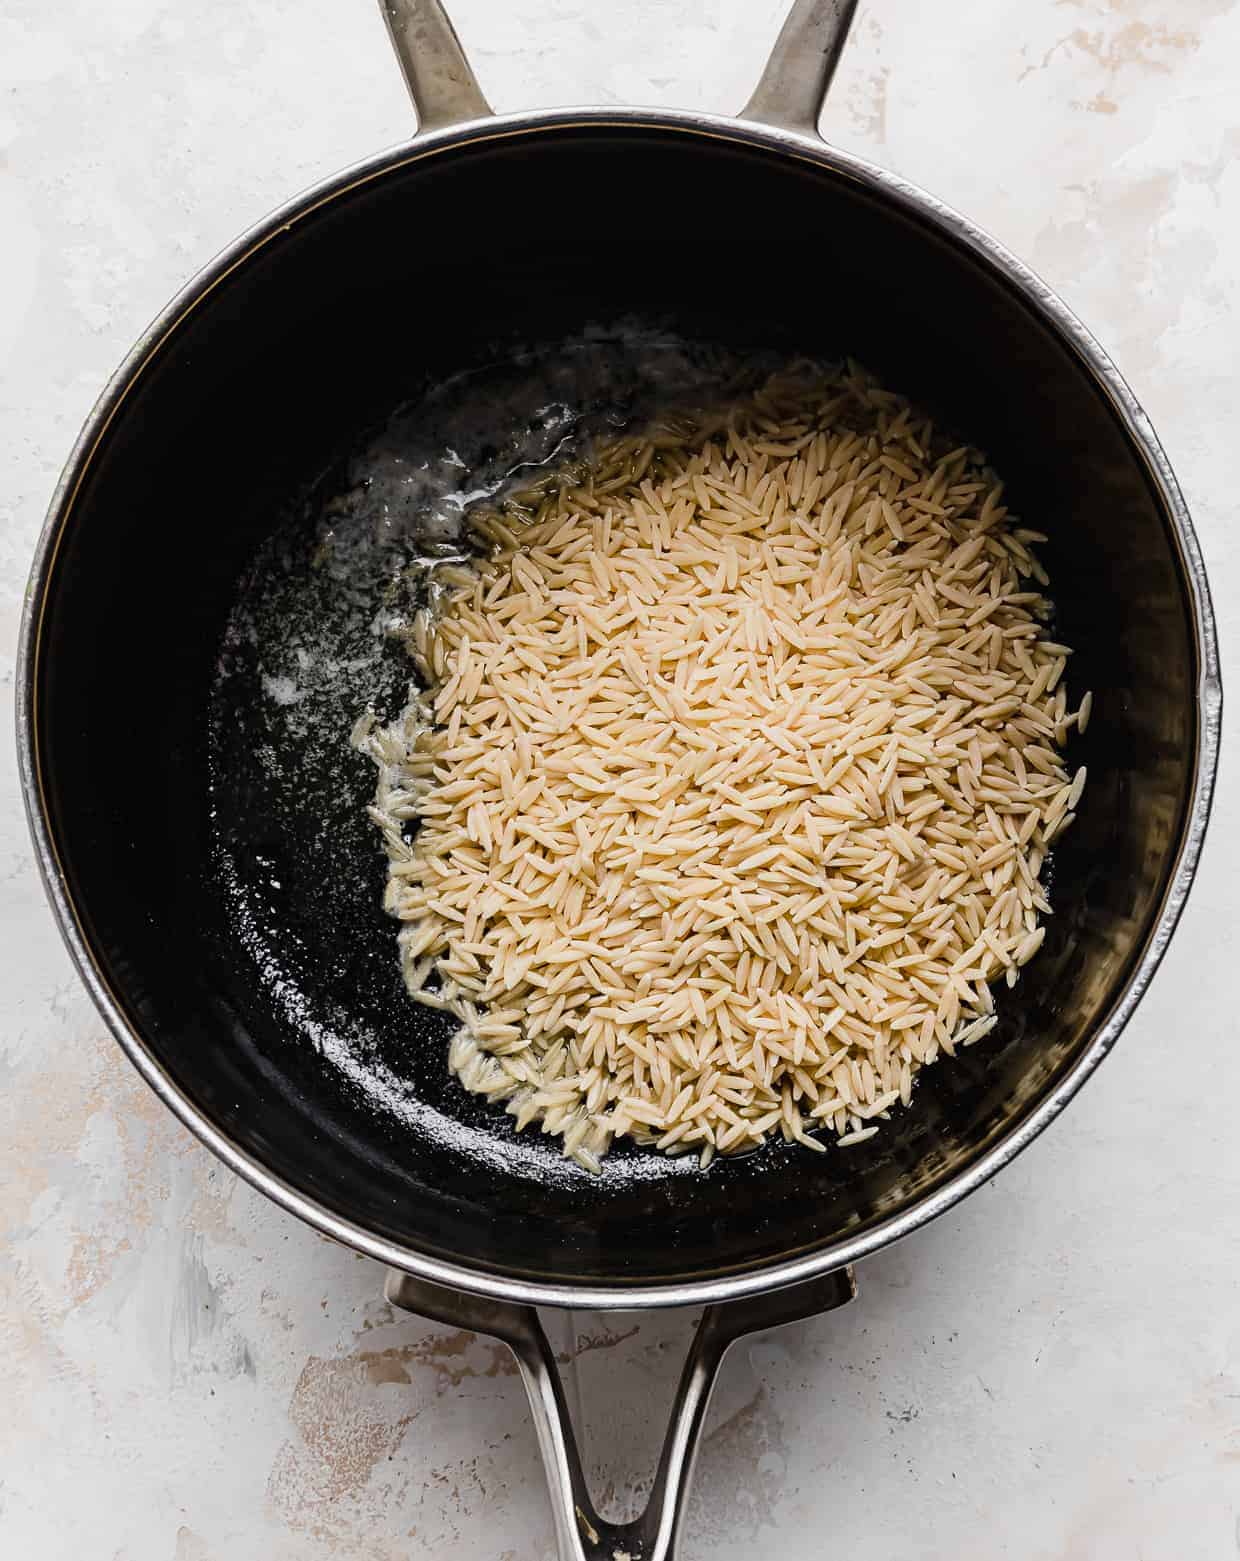 Orzo pasta in a black saucepan.